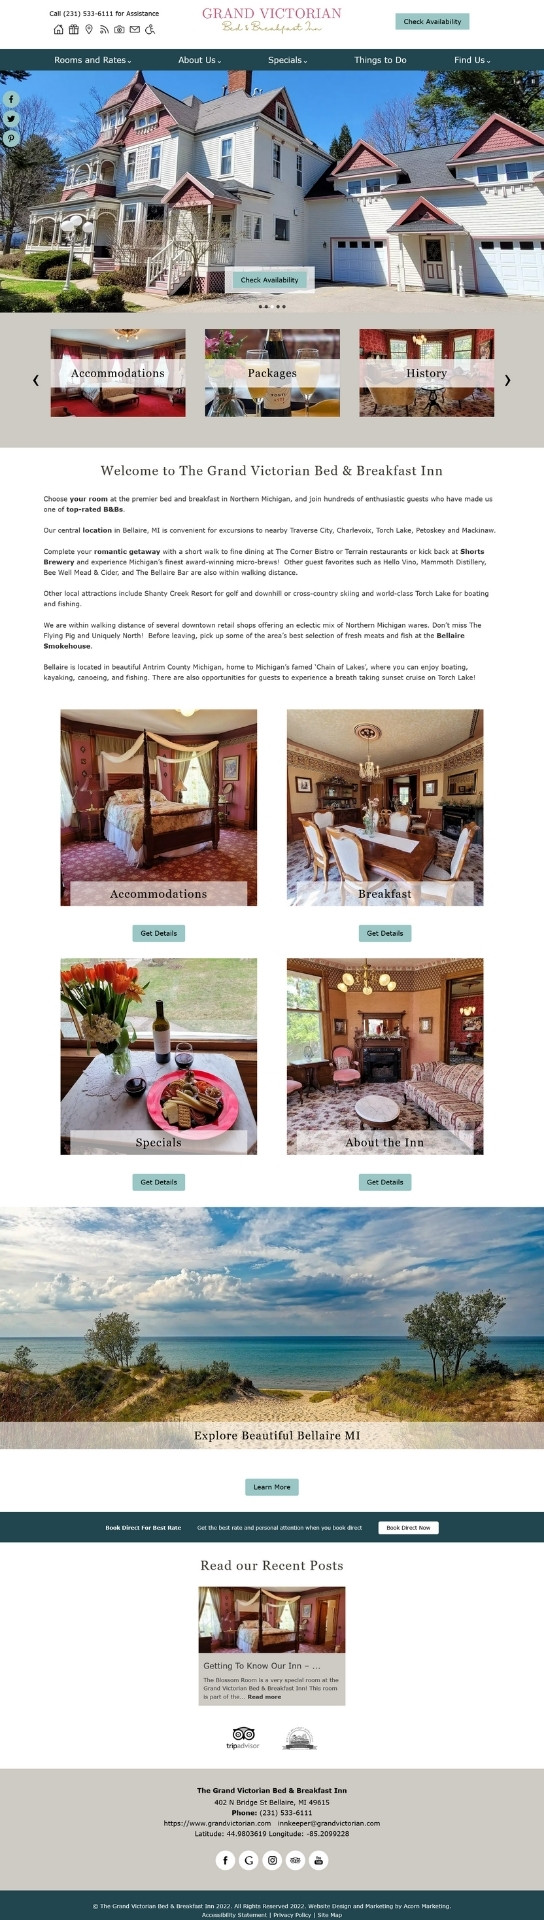 The Grand Victorian Bed & Breakfast Inn website homepage screenshot